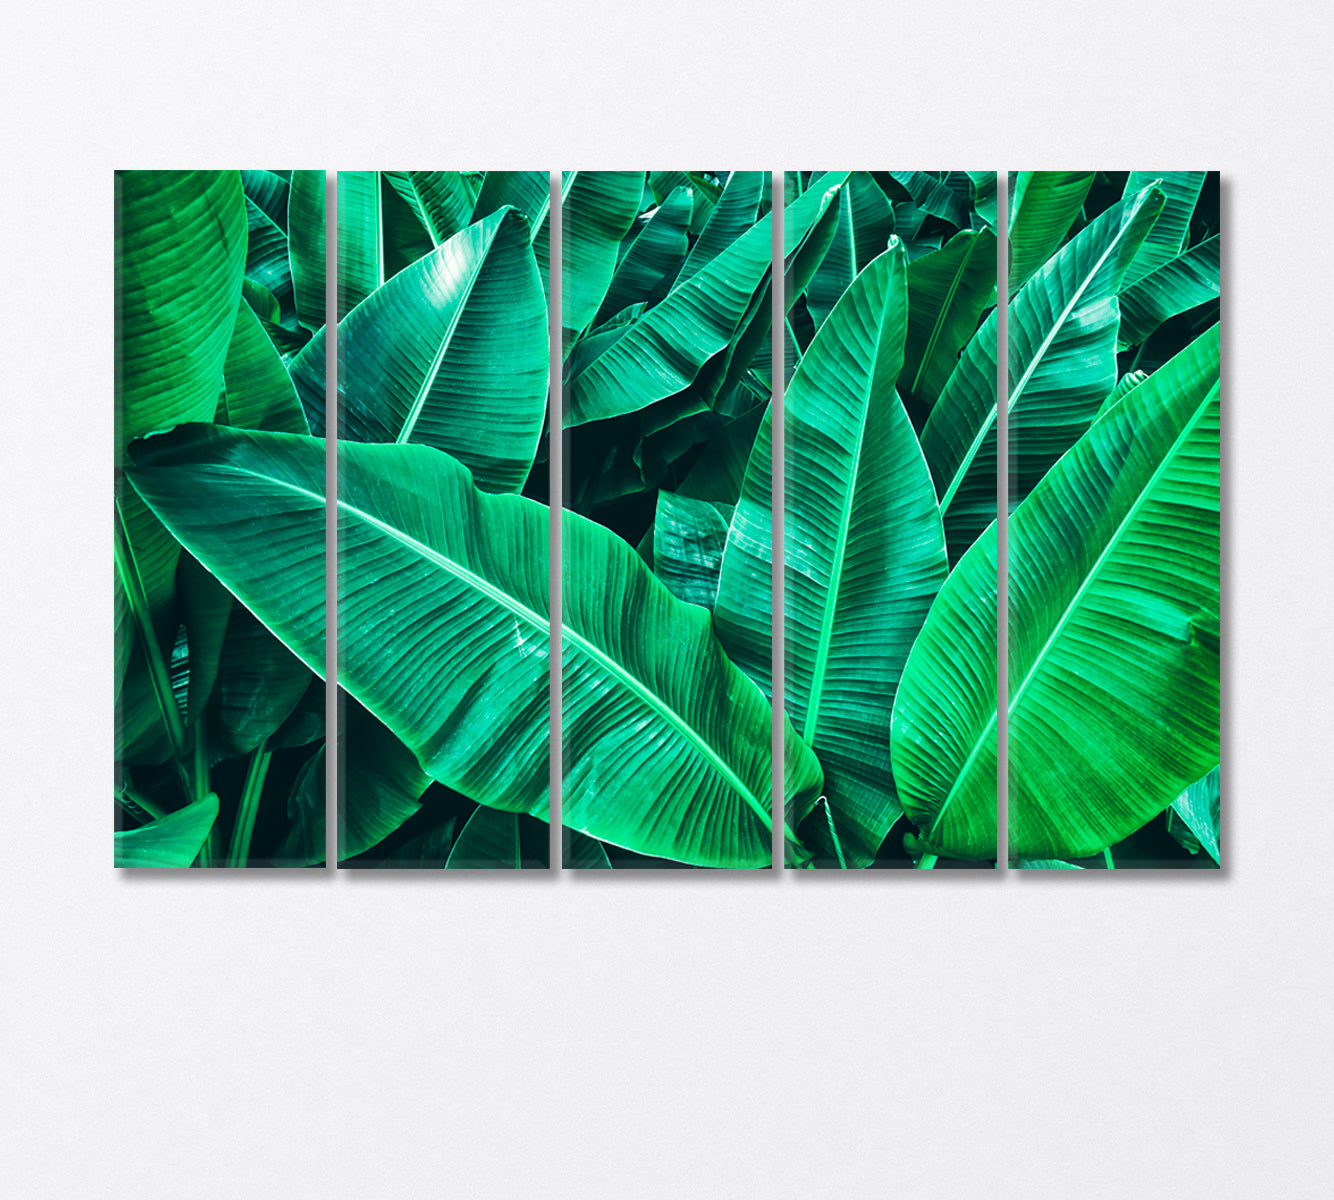 Tropical Banana Leaves Canvas Print-Canvas Print-CetArt-5 Panels-36x24 inches-CetArt